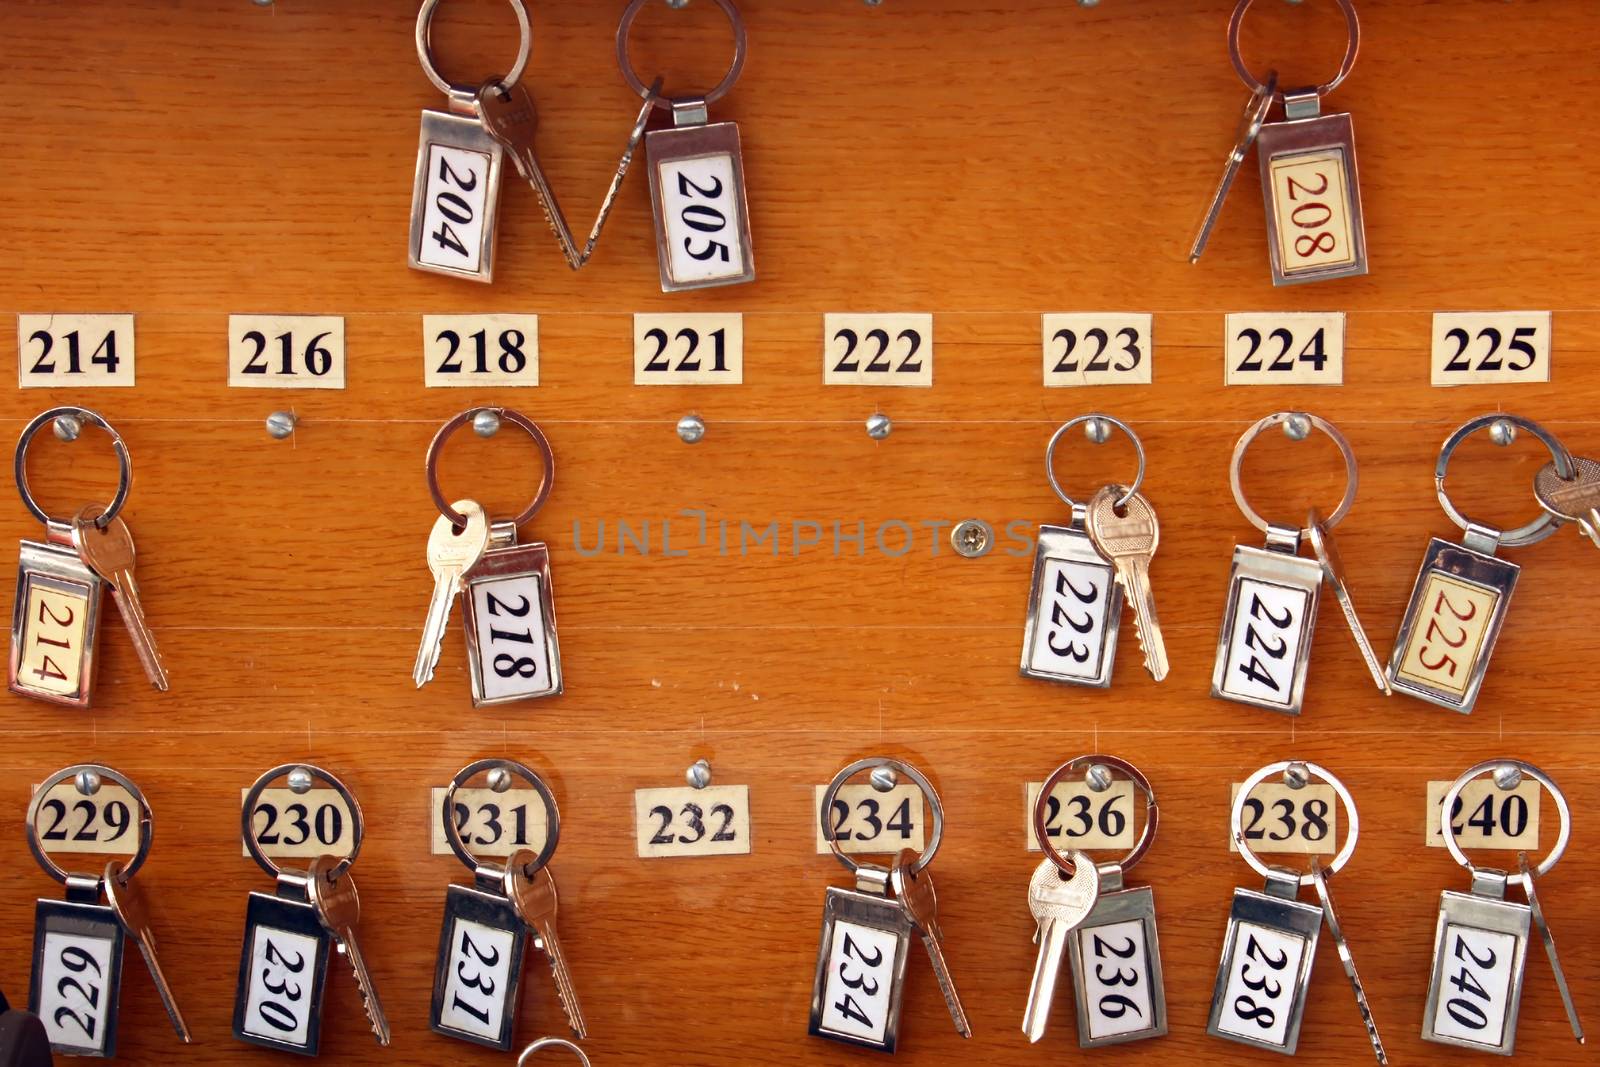 Several hotel keys on wooden board